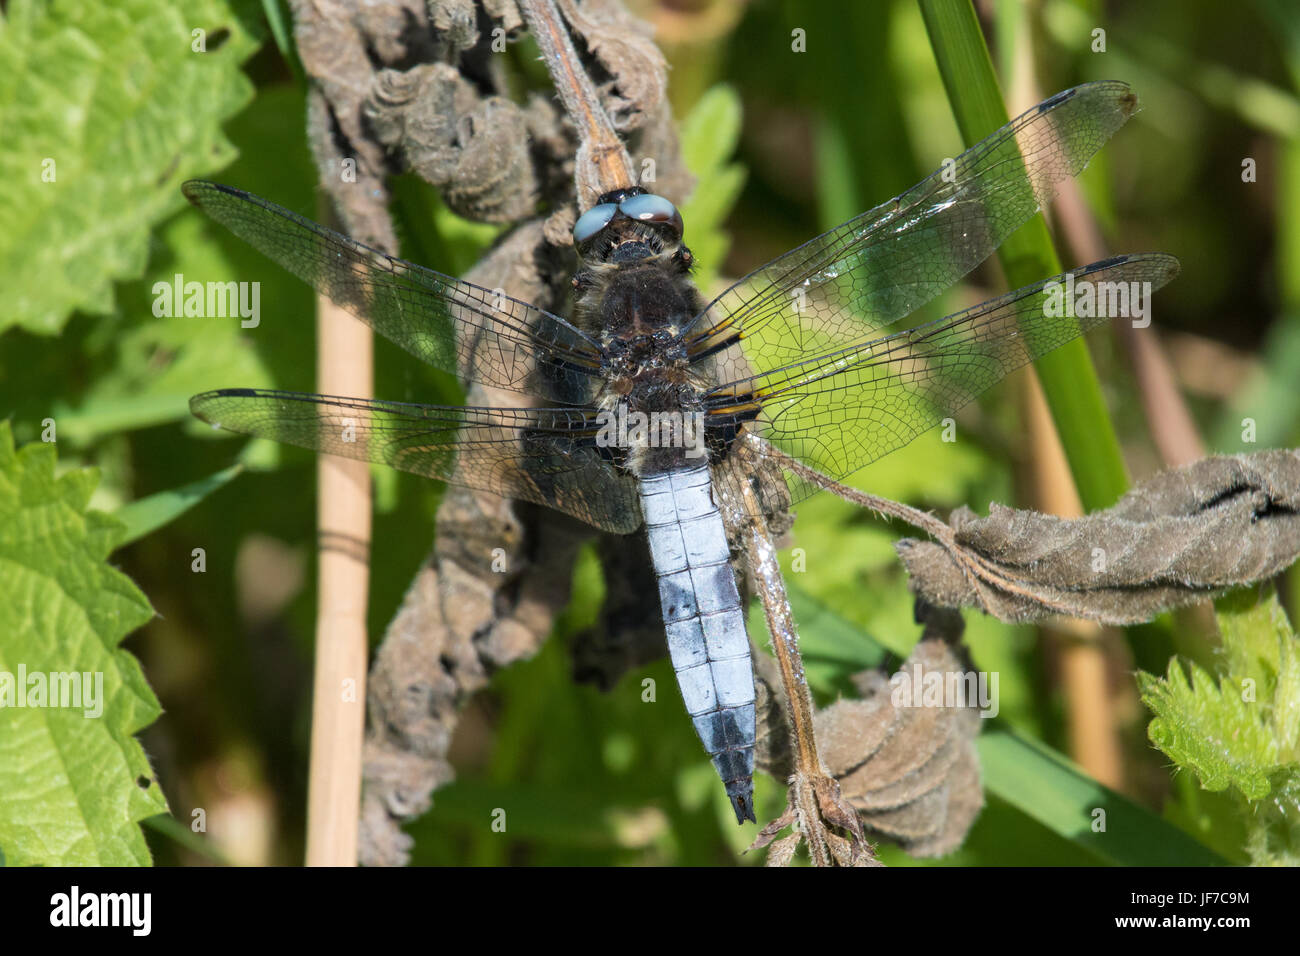 Chaser escasos masculina (Libellula fulva) dragonfly encaramado sobre una planta de tallo muerto Foto de stock